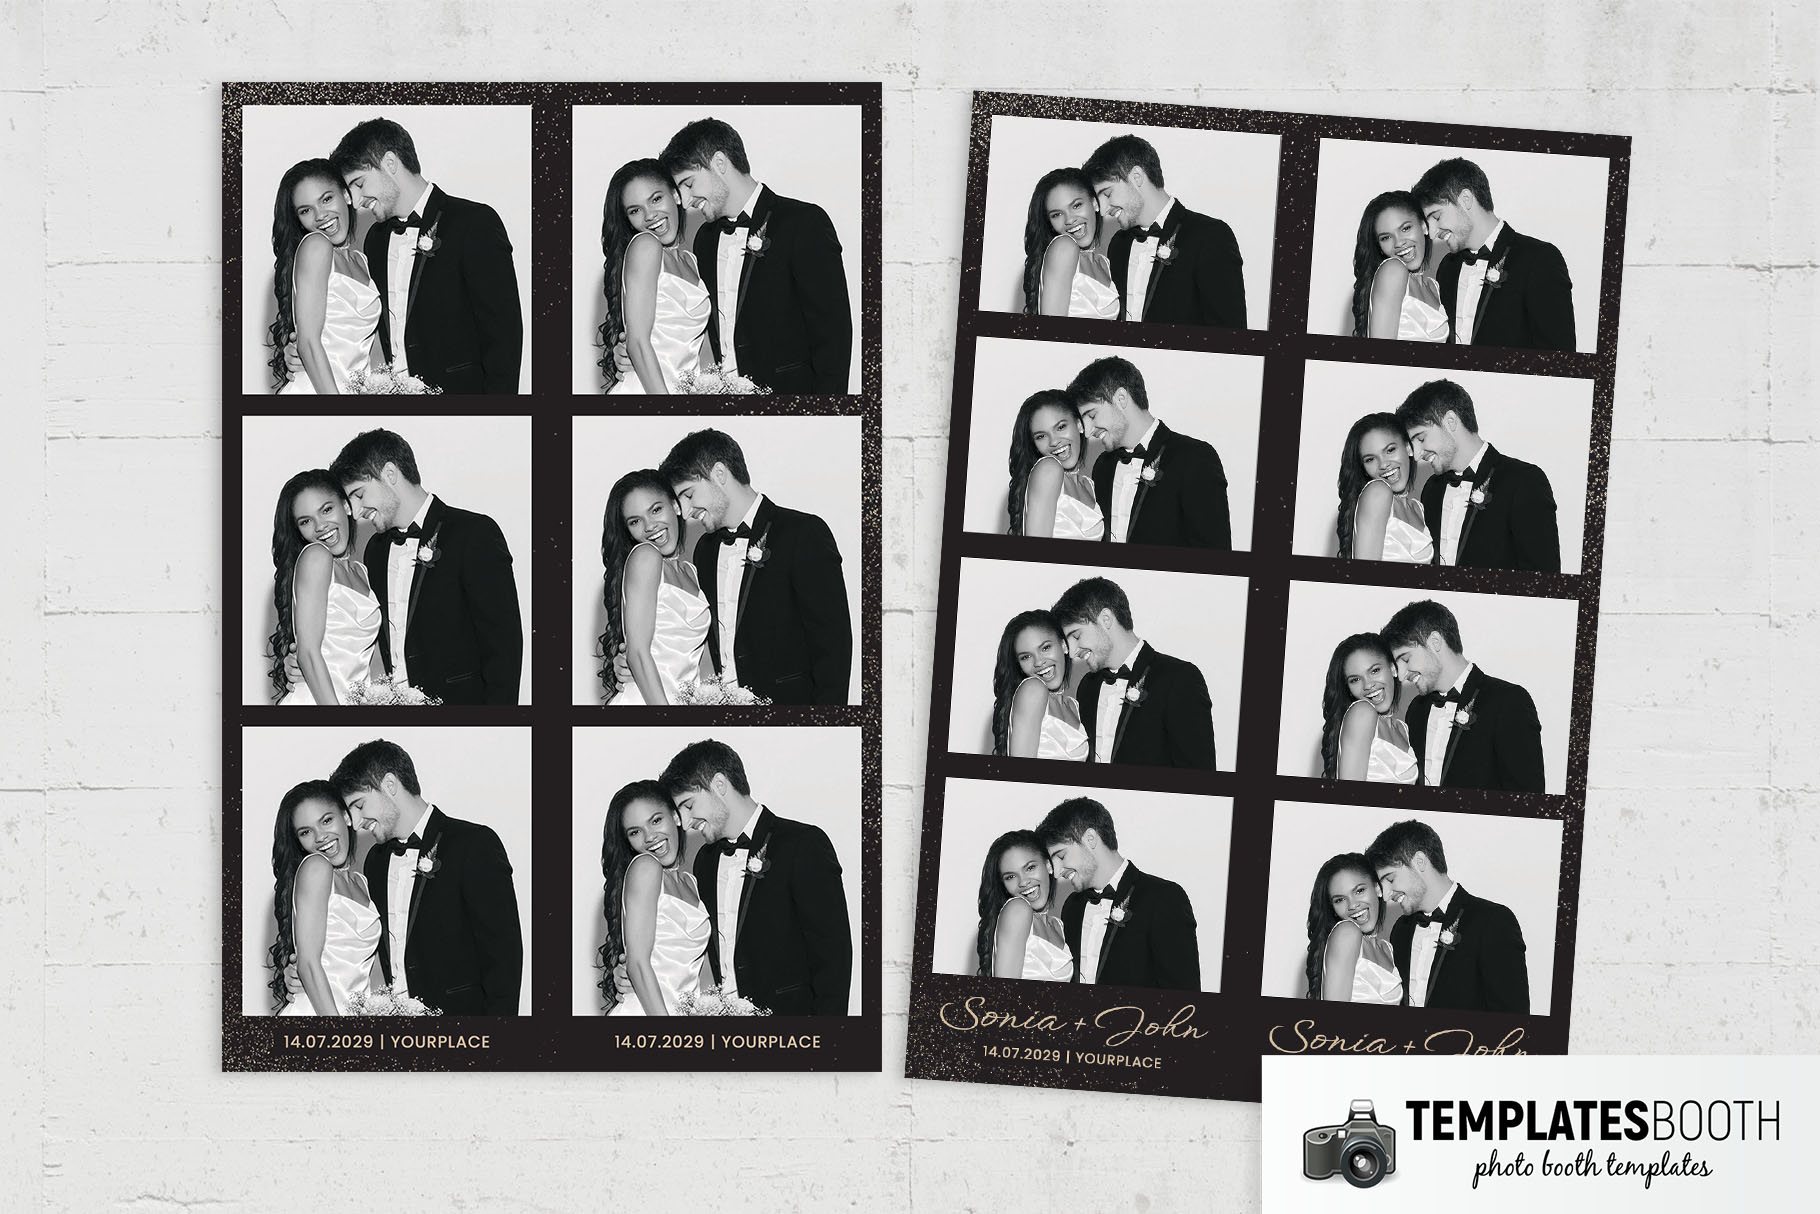 Minimalist Wedding Photo Booth Template V4